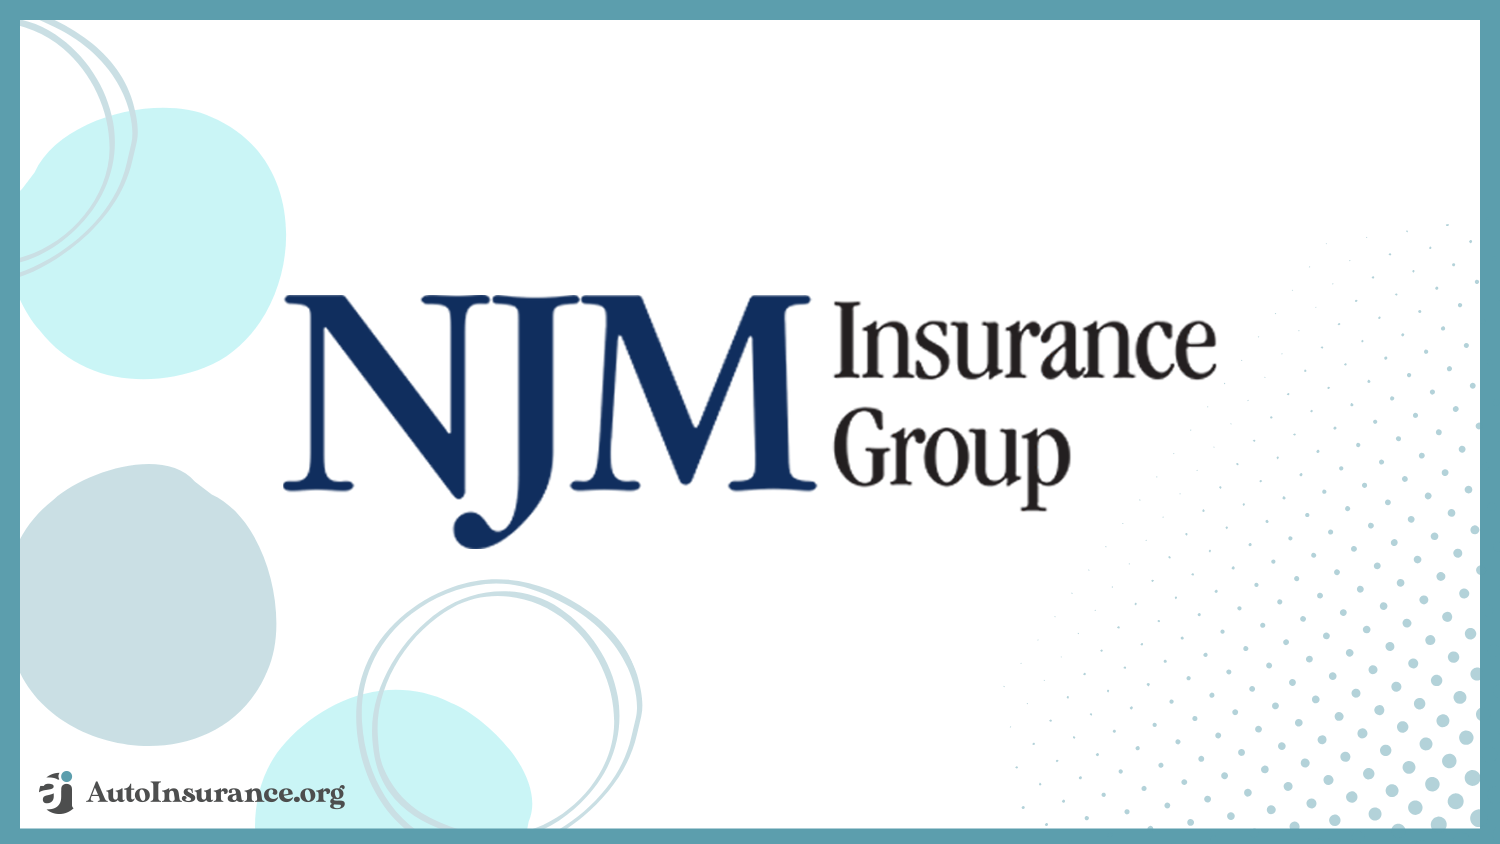 NJM insurance Best Rideshare Auto Insurance